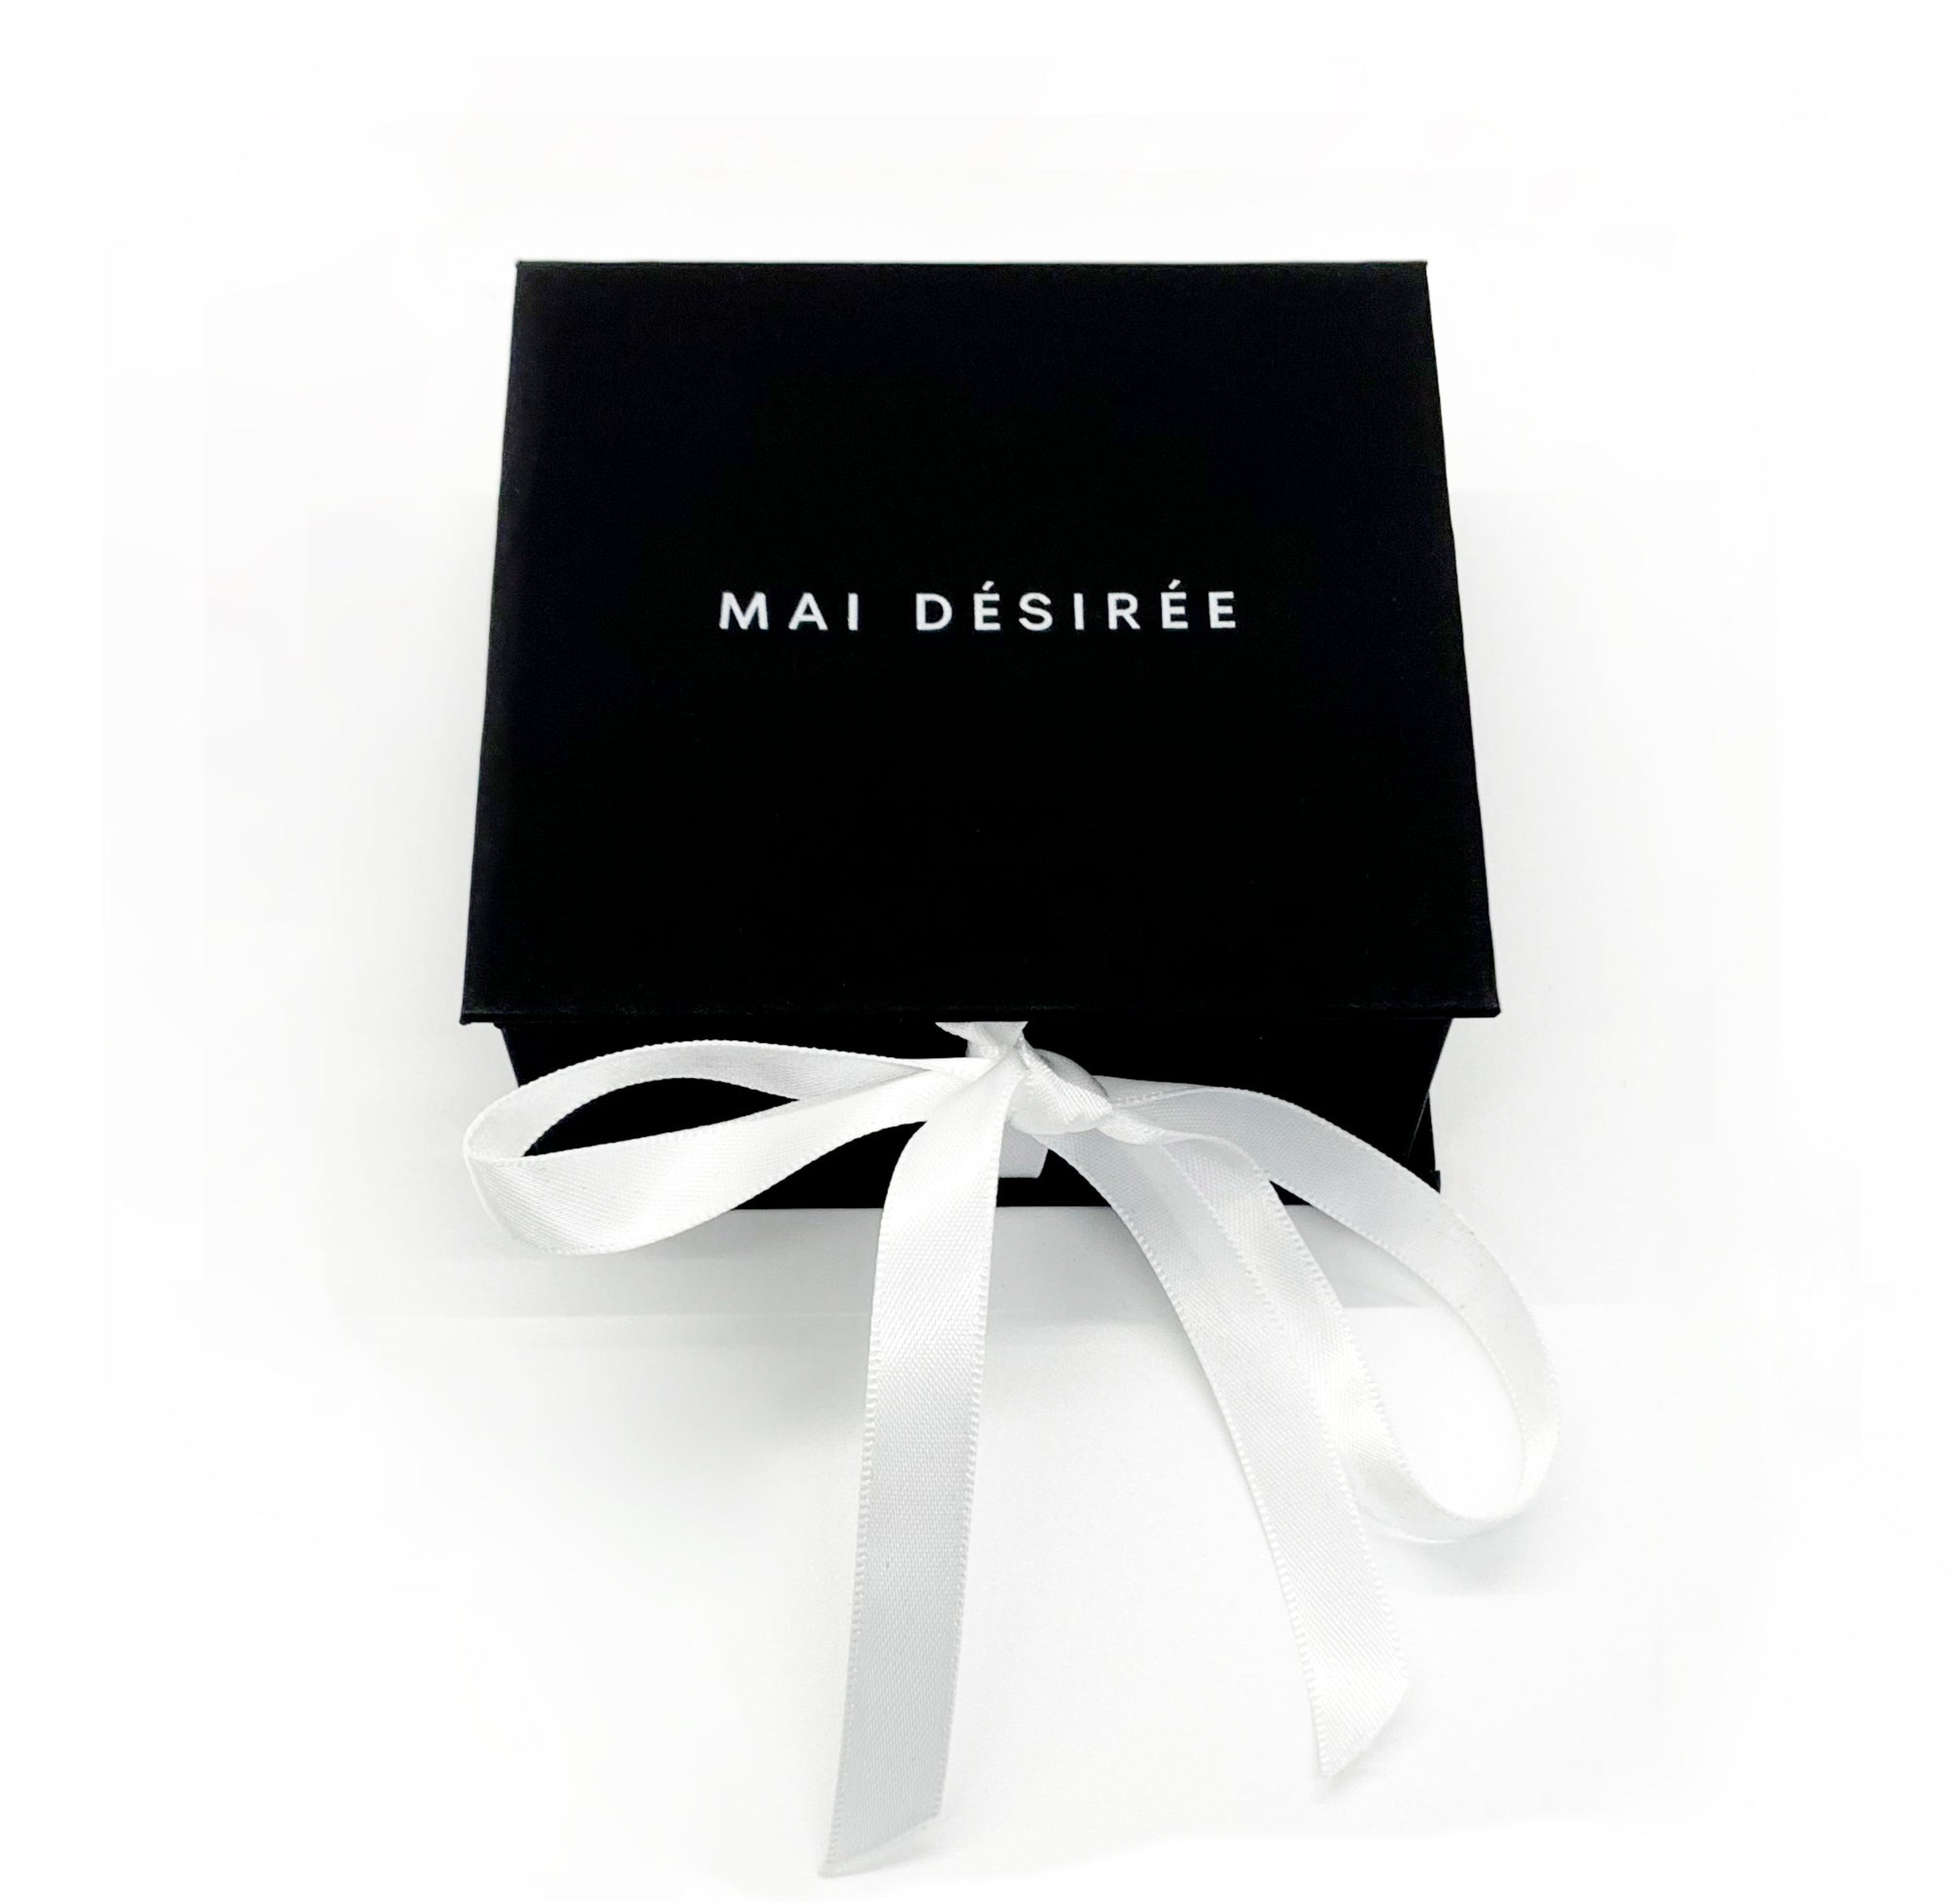 Mai Desiree waterproof jewelry gift box